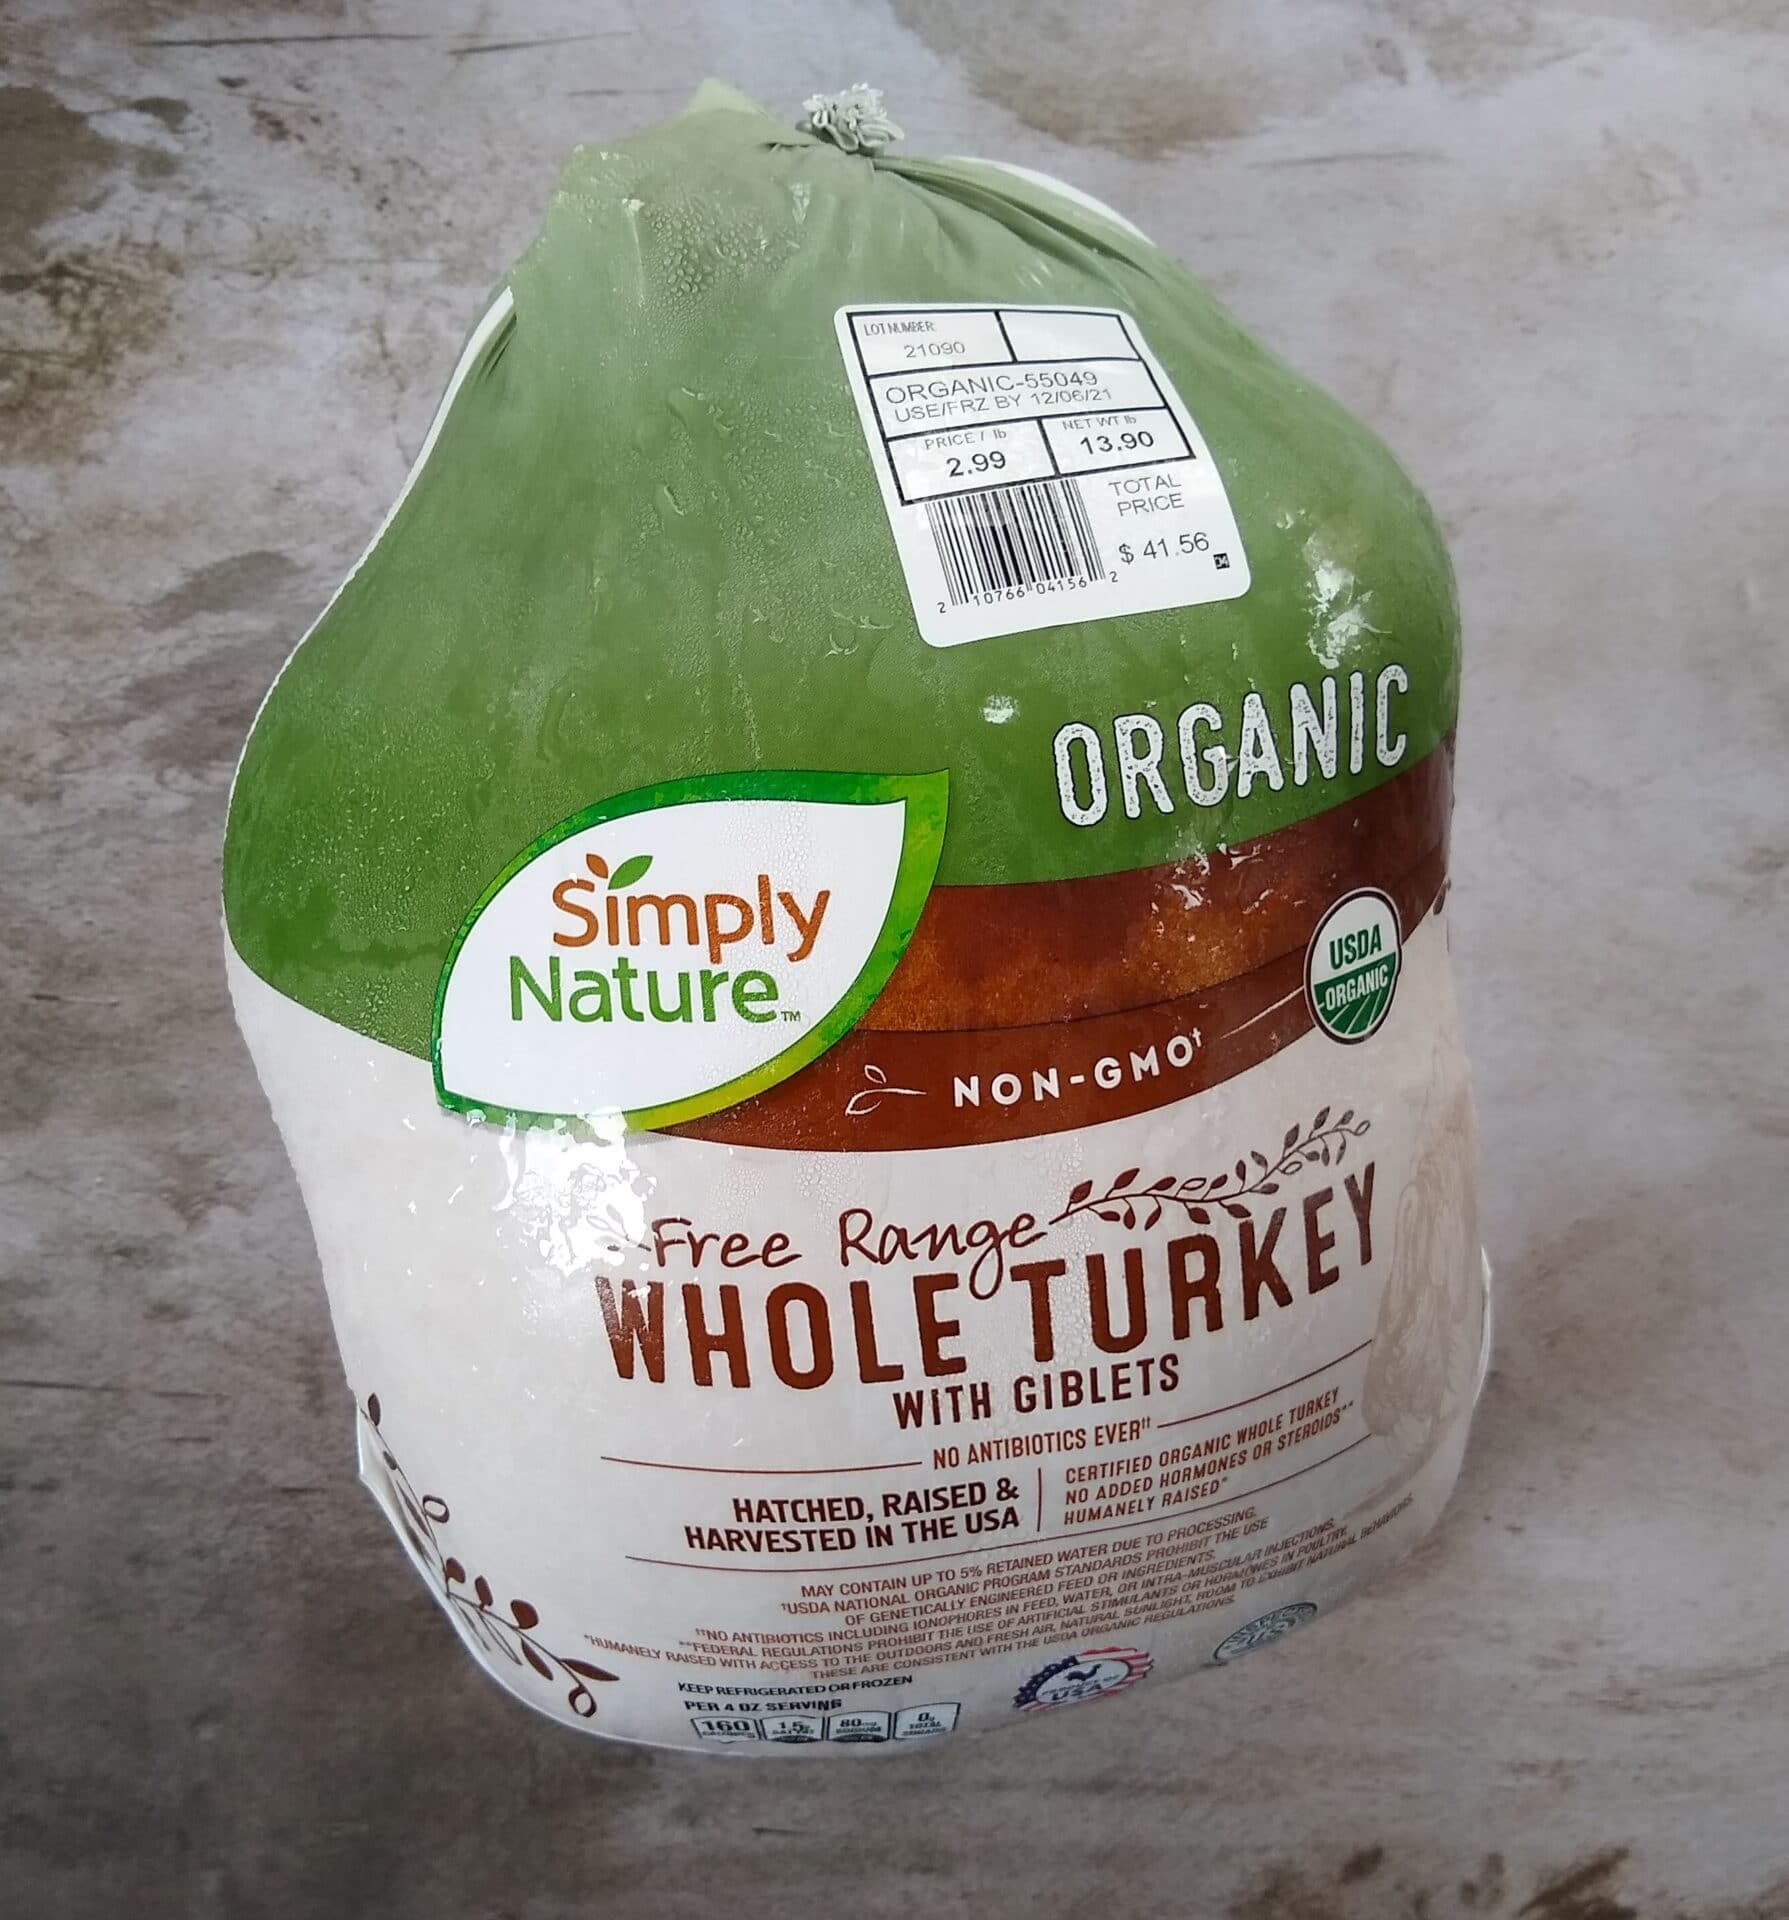 Organic Whole Turkey 8-10 Pounds at Whole Foods Market